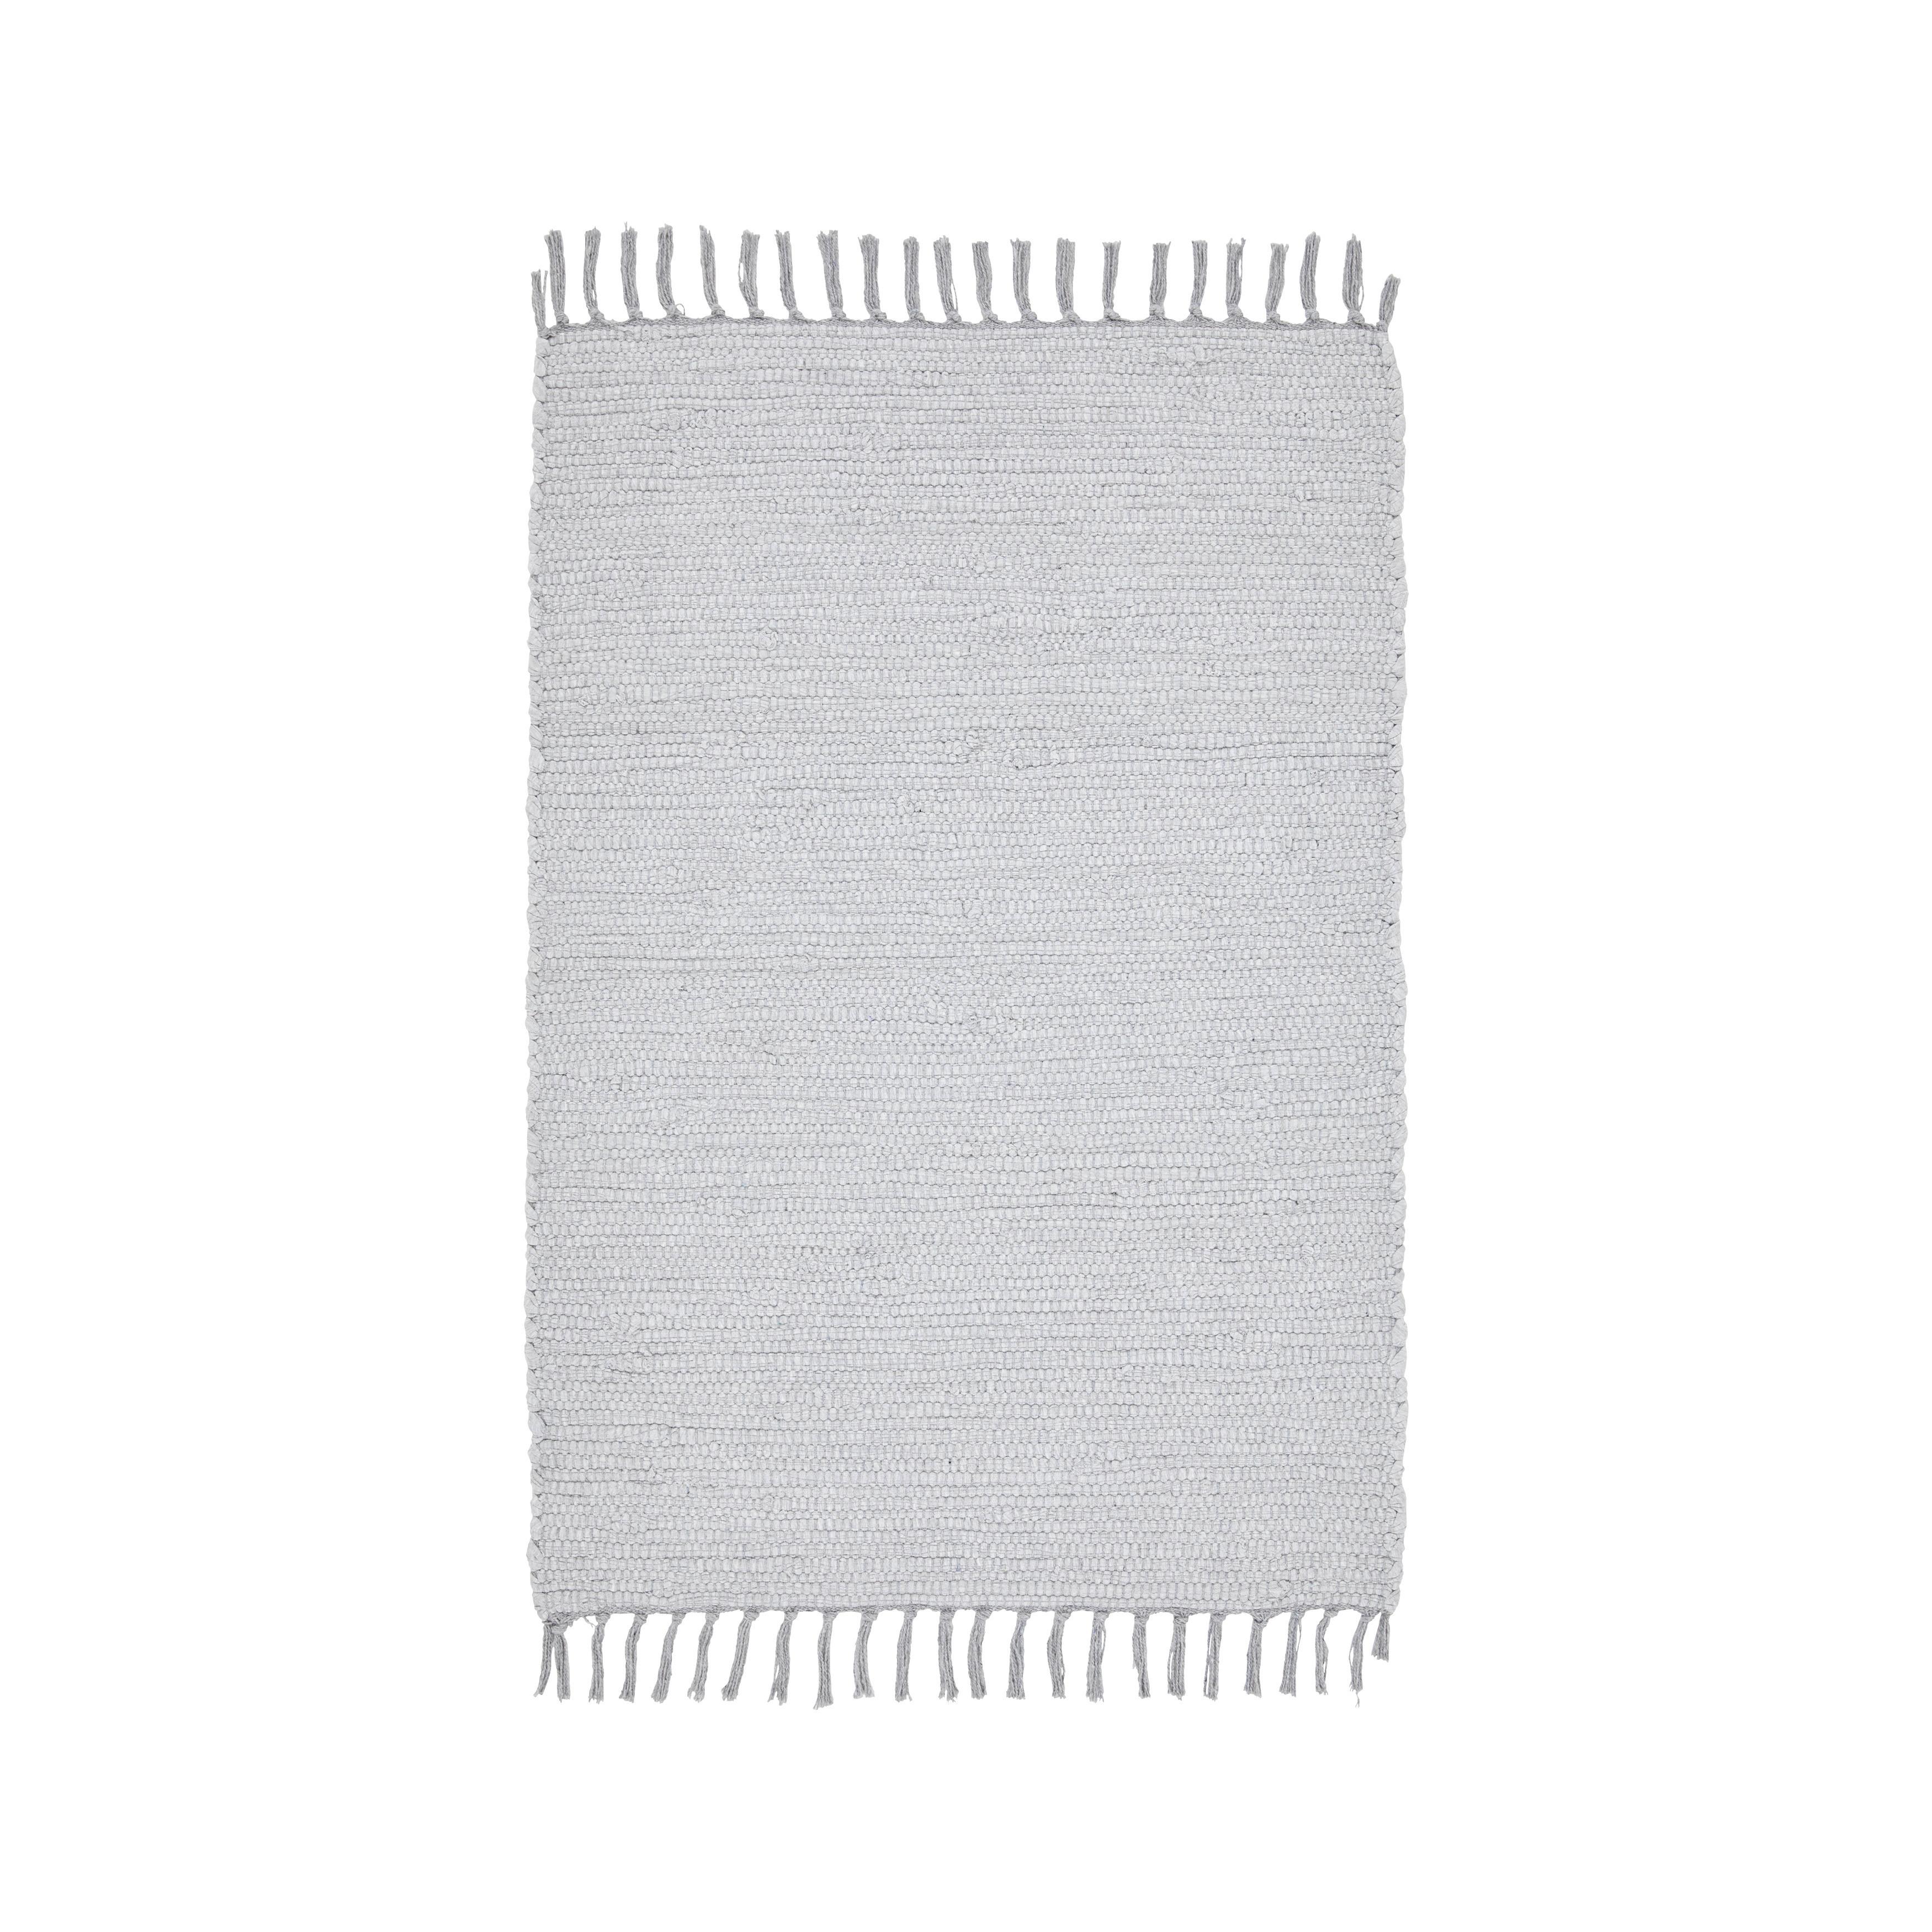 PREPROGA IZ KRP JULIA 2 - srebrne barve/siva, Romantika, tekstil (70/130cm) - Modern Living